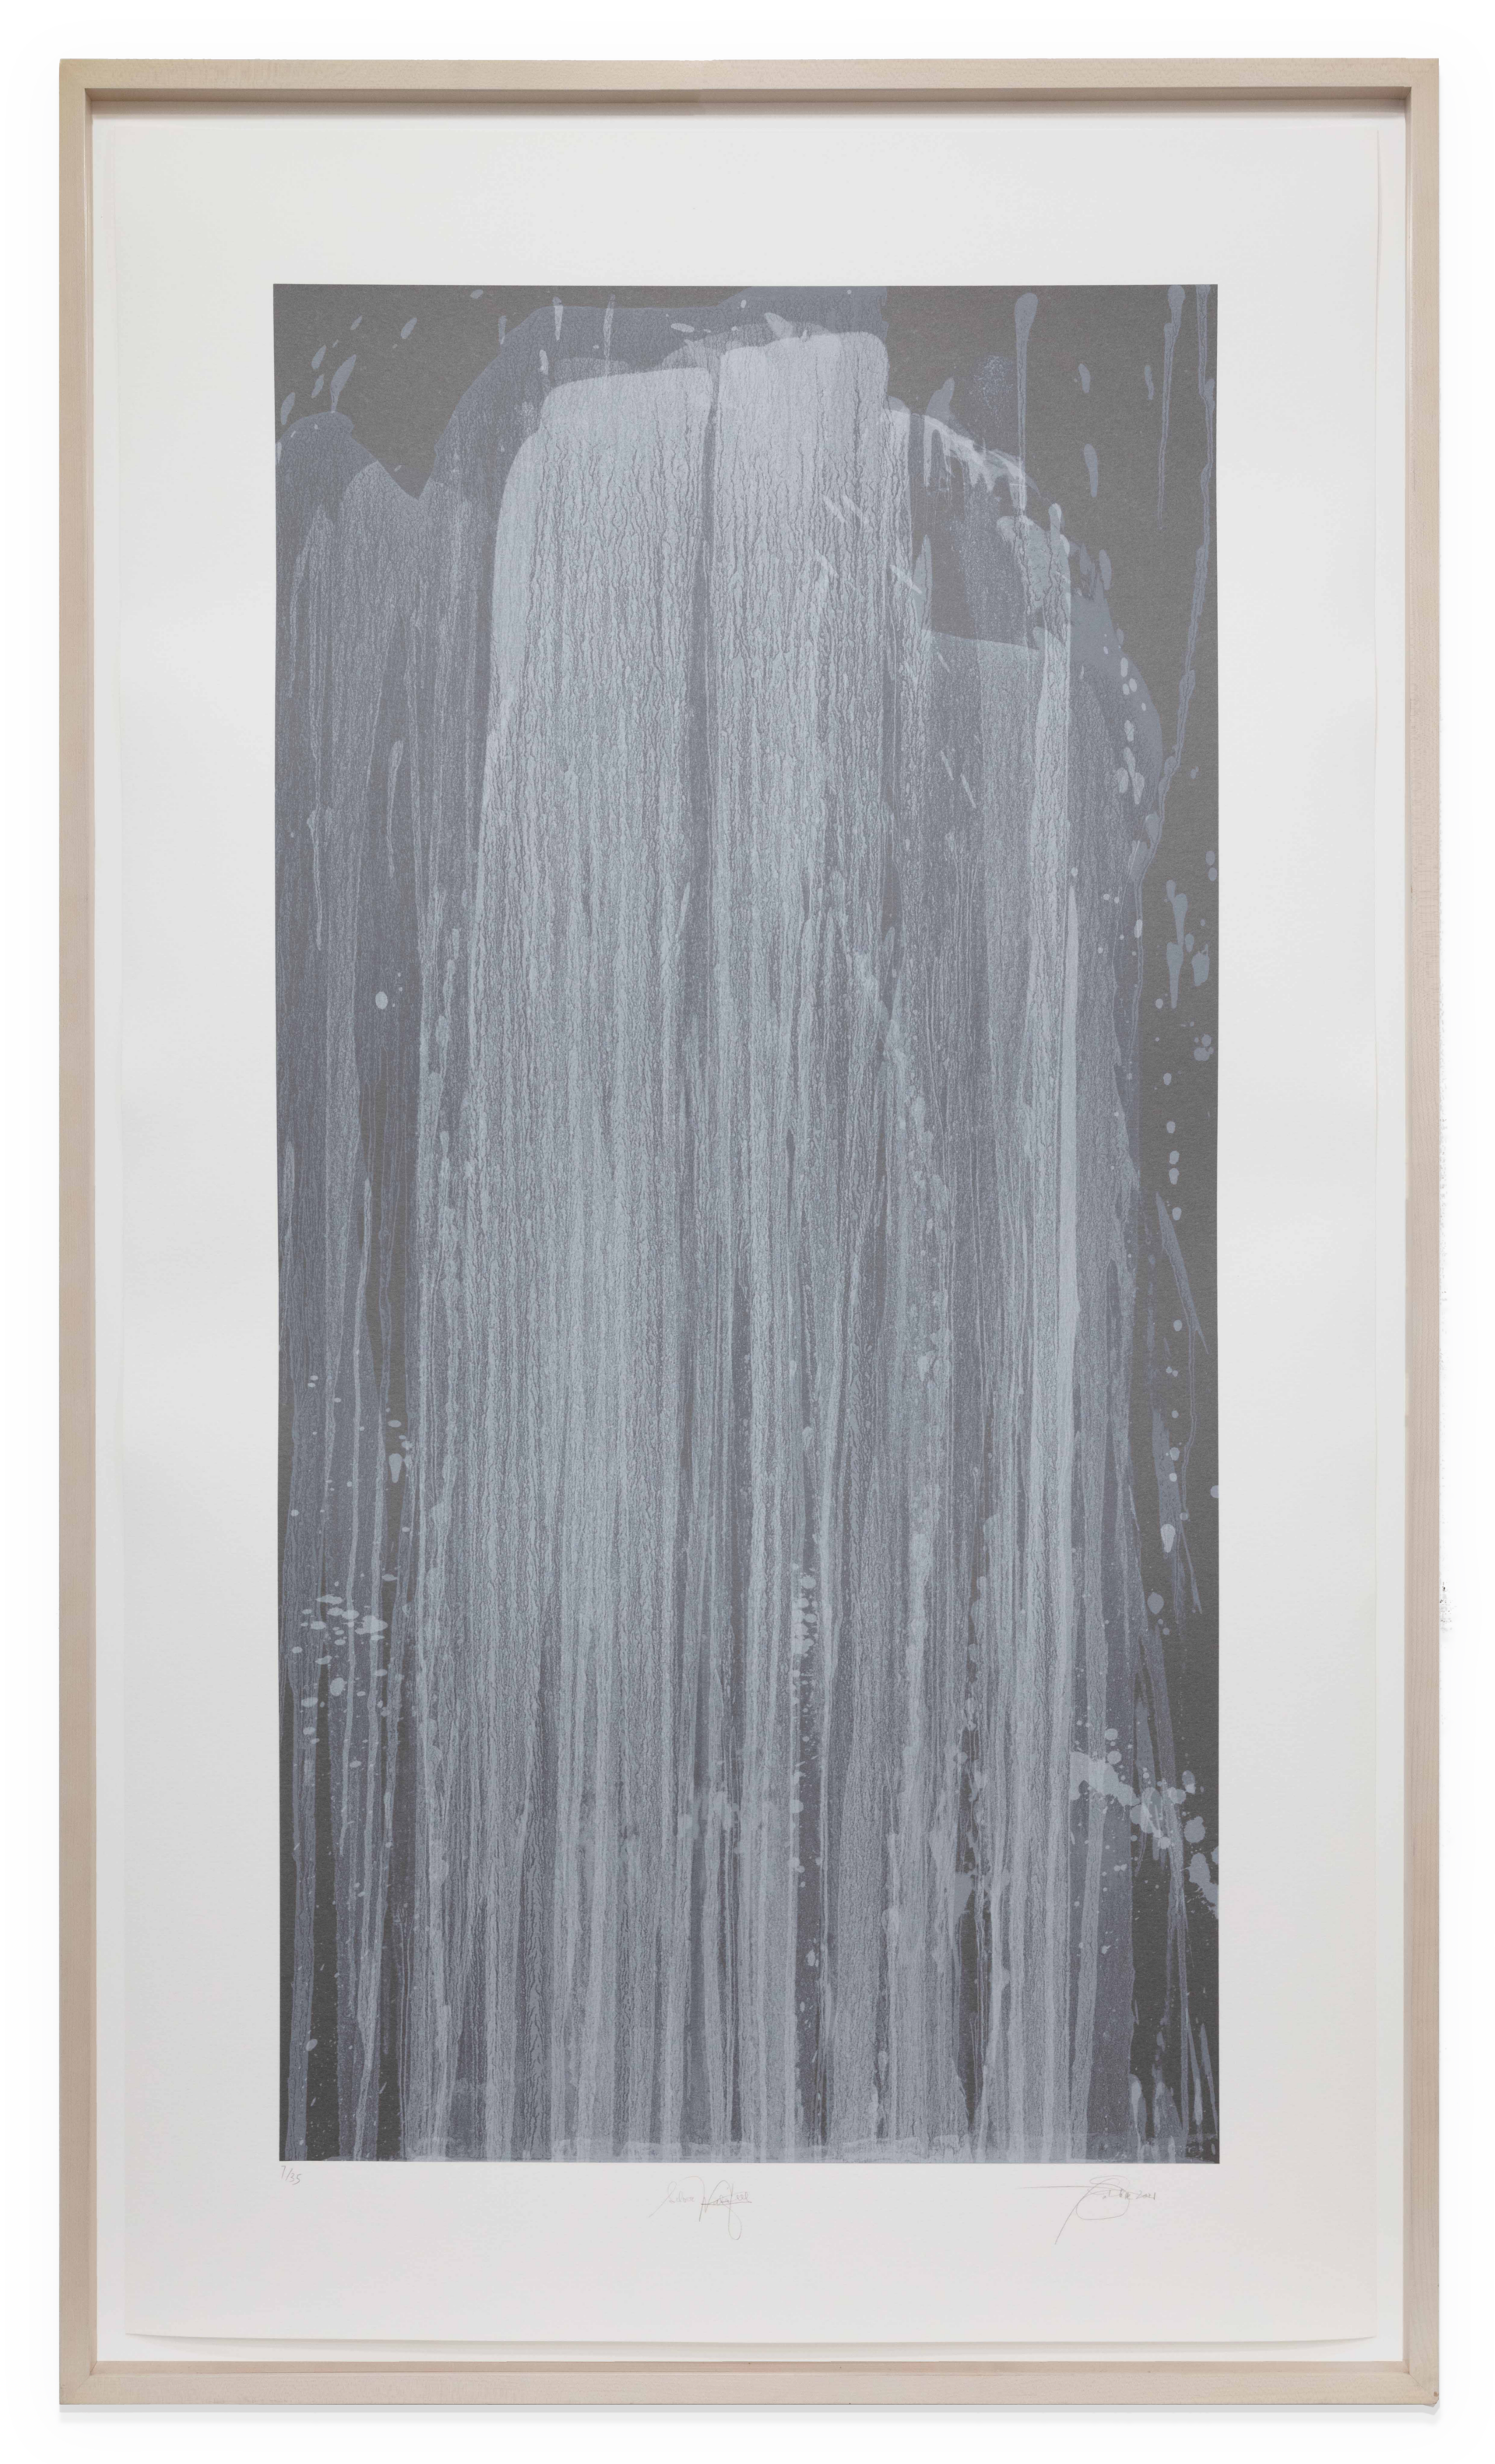 Pat Steir Silver Waterfall, 2001 Screenprint 56 1/4 x 32 inches (142.9 x 81.3 cm) Framed Dimensions: 59 x 34 1/2 inches (149.9 x 87.6 cm) Edition of 35